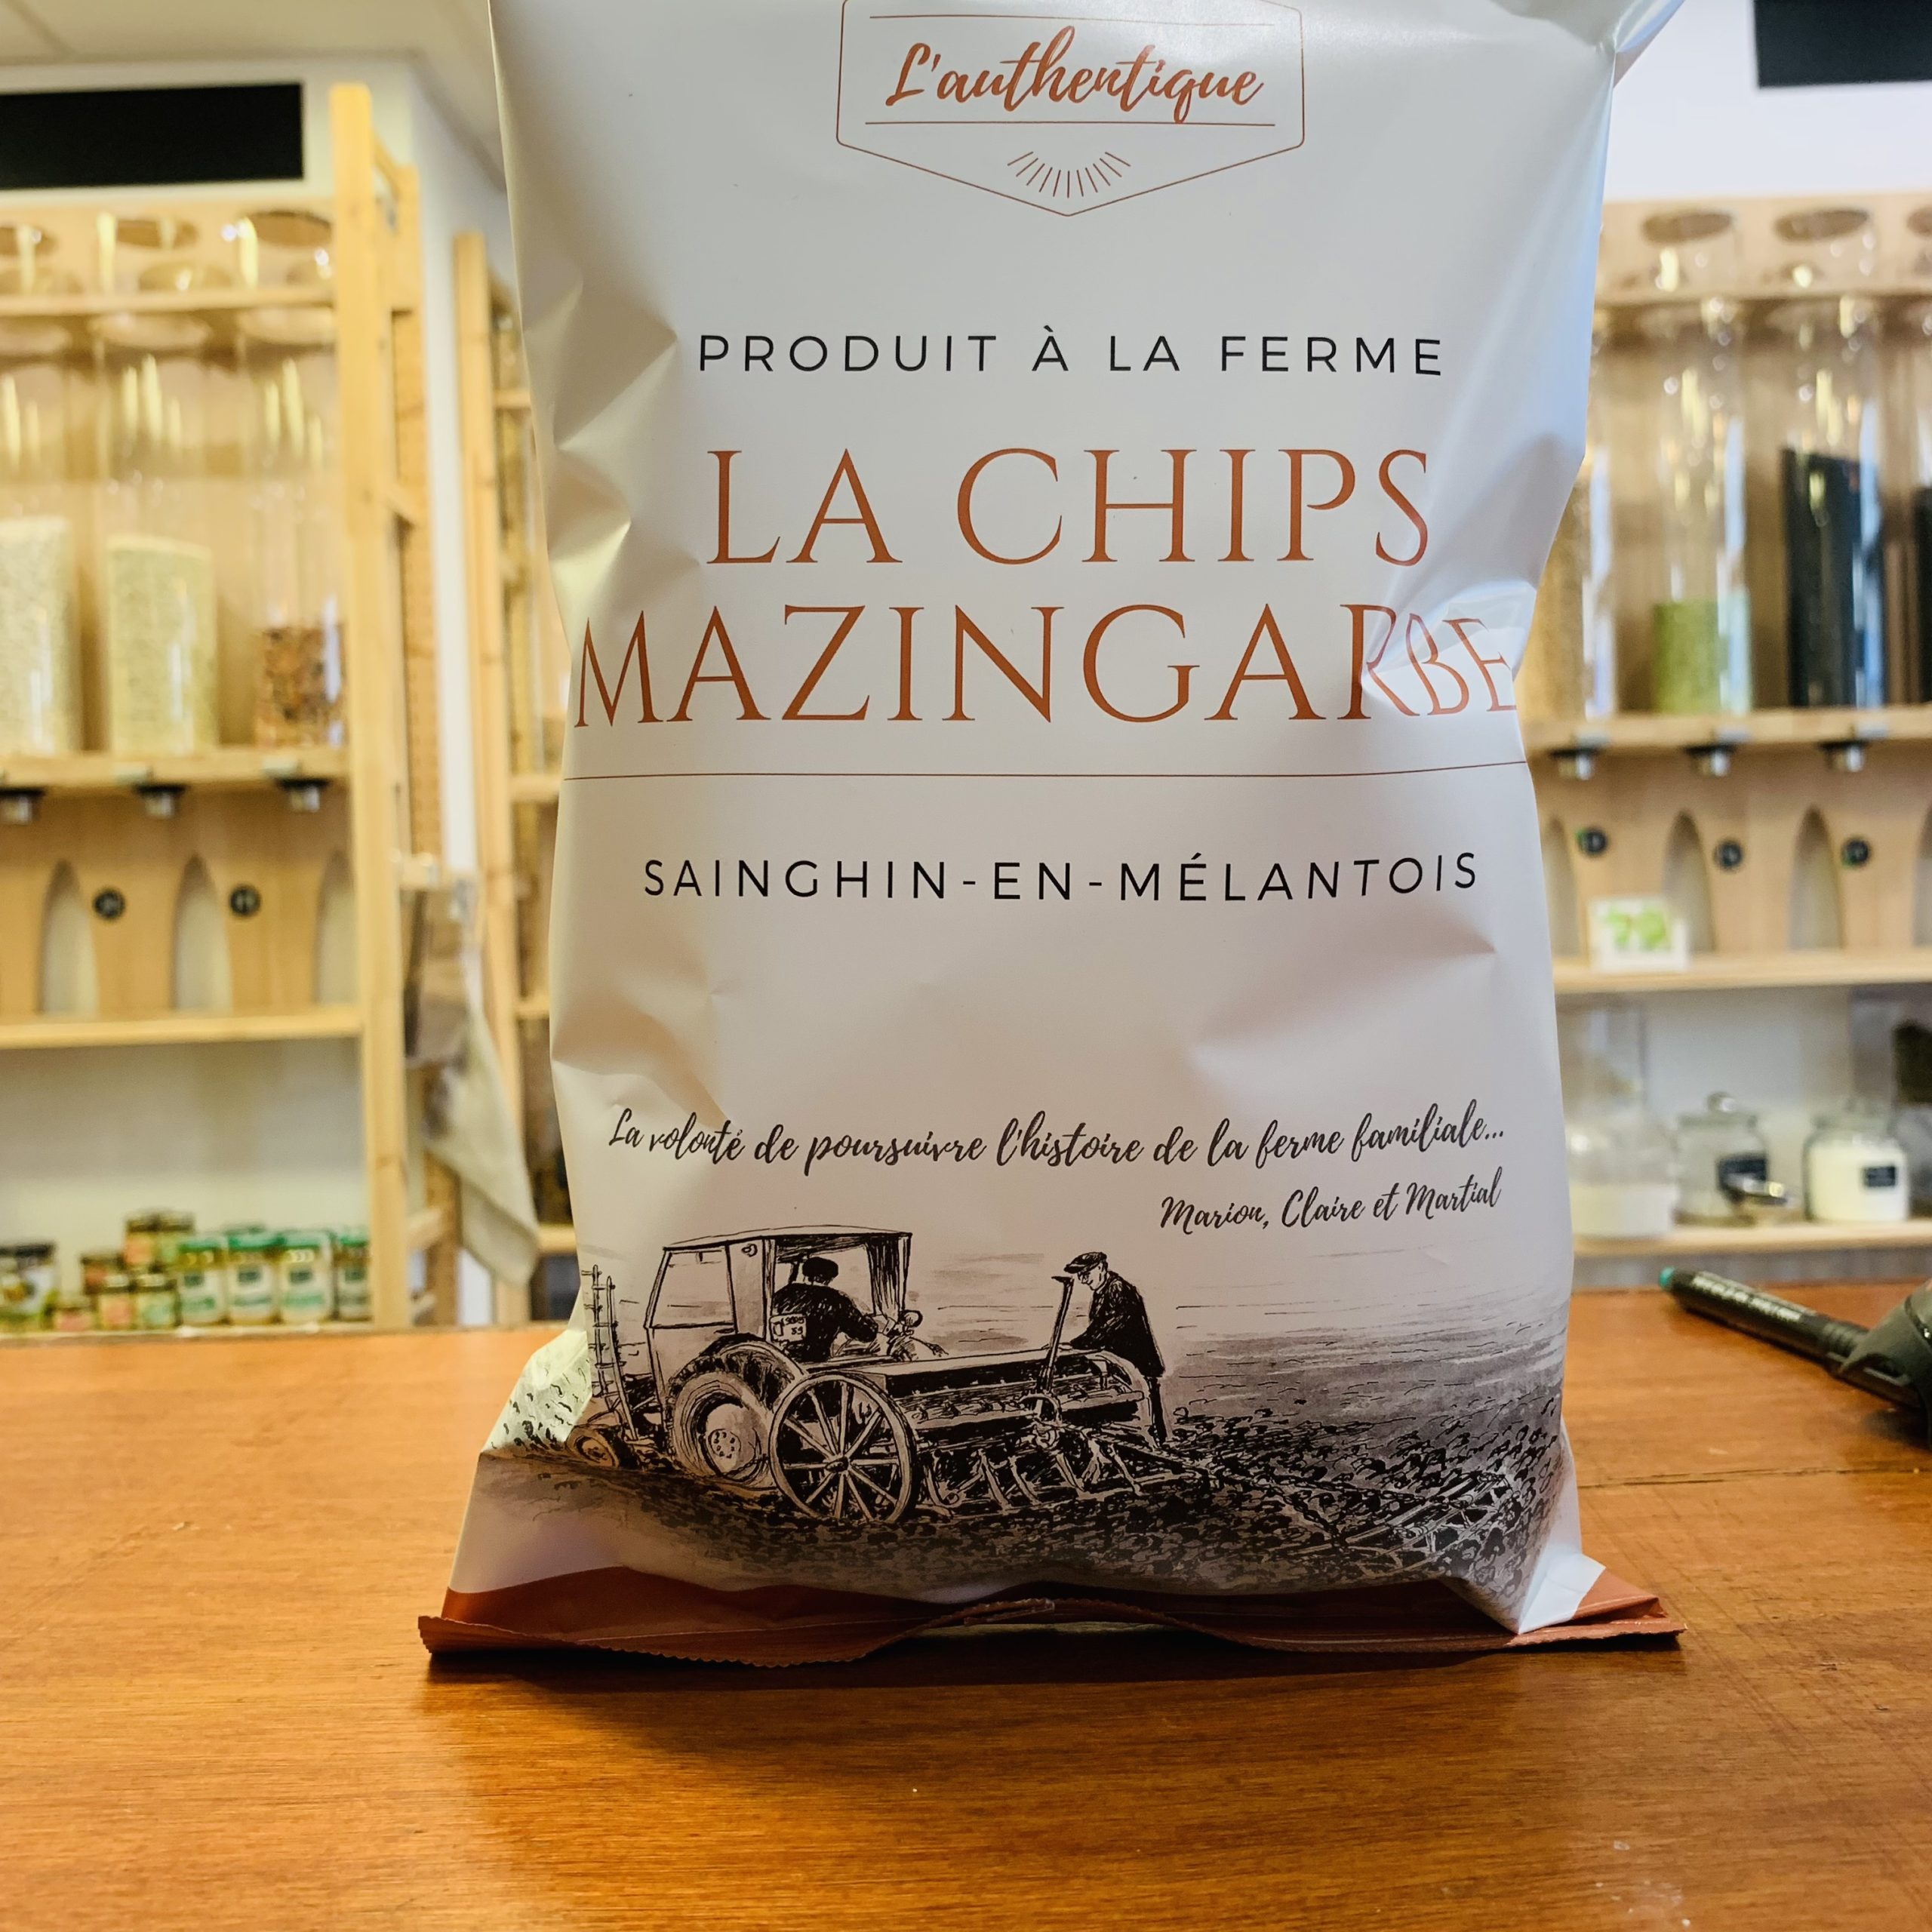 Produits La Chips Mazingarbe en vente B2B